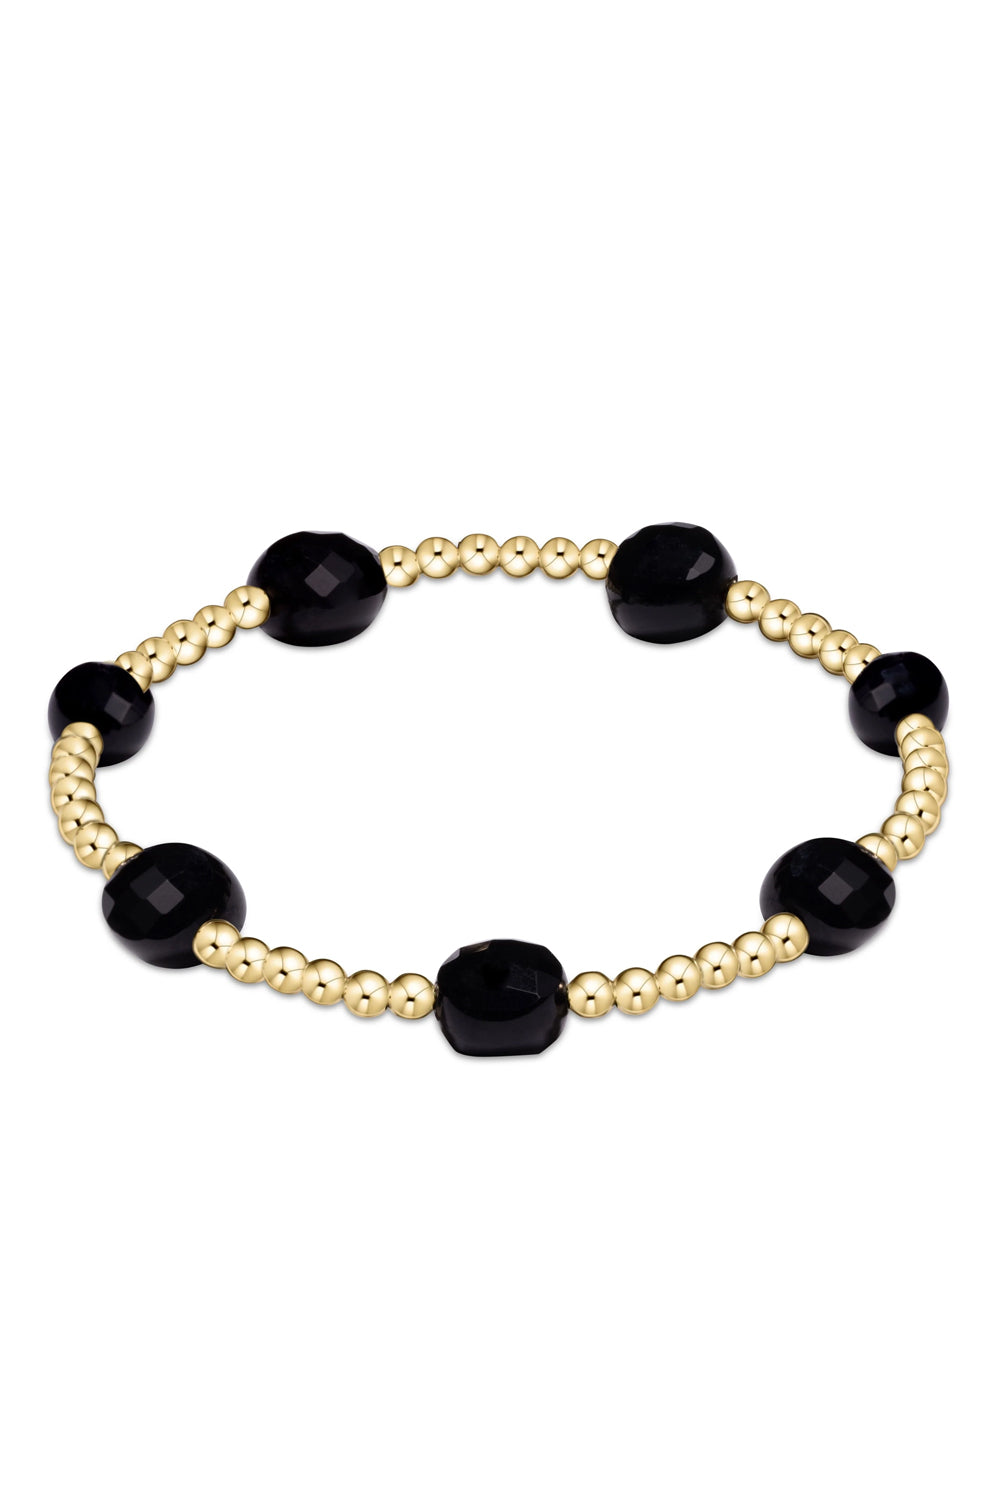 enewton: Admire Gold 3mm Bead Bracelet - Faceted Onyx | Makk Fashions